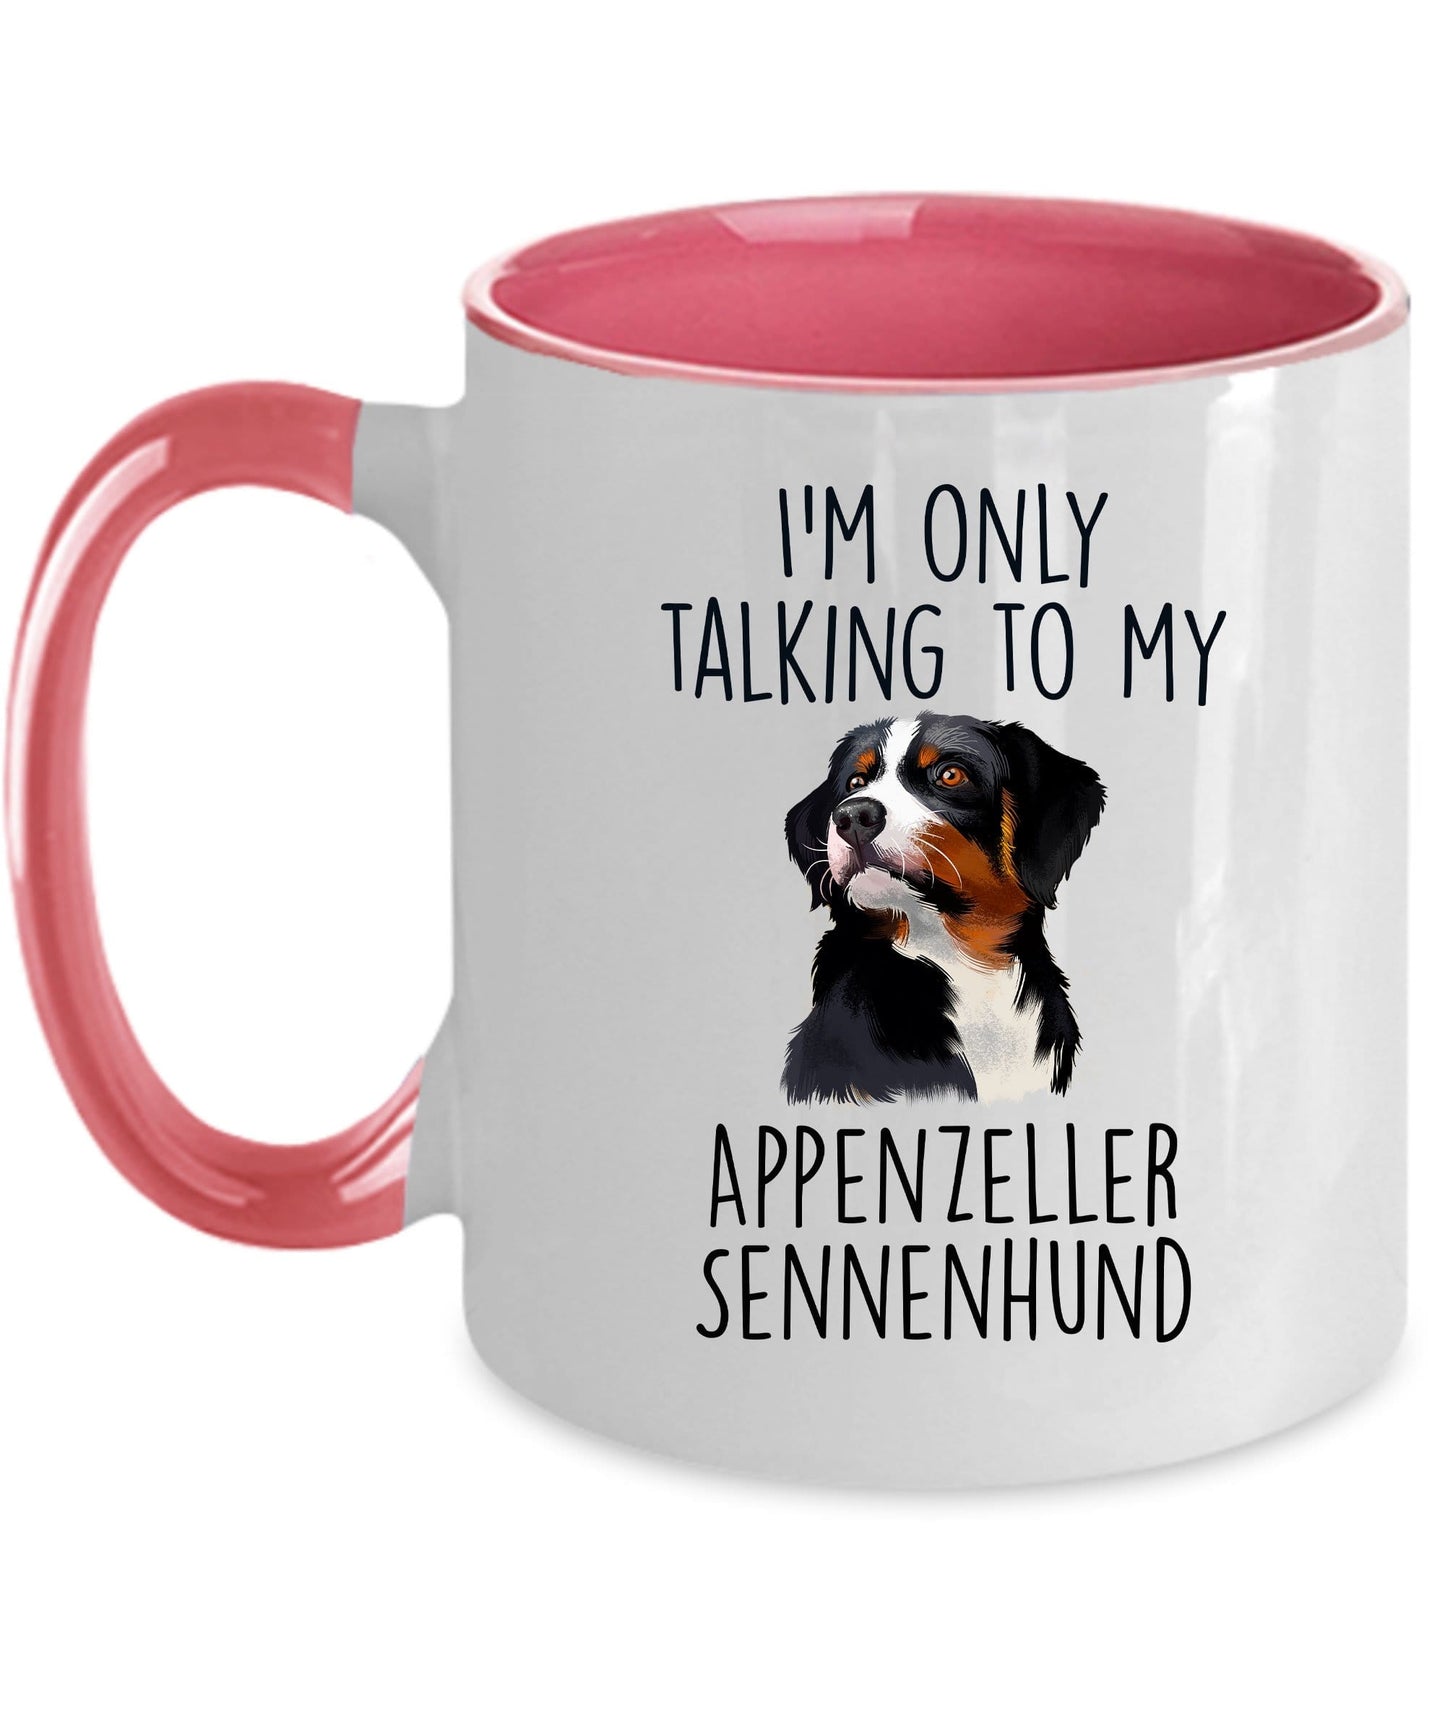 Appenzeller Sennenhund - I'm Only Talking to Funny Coffee Mug